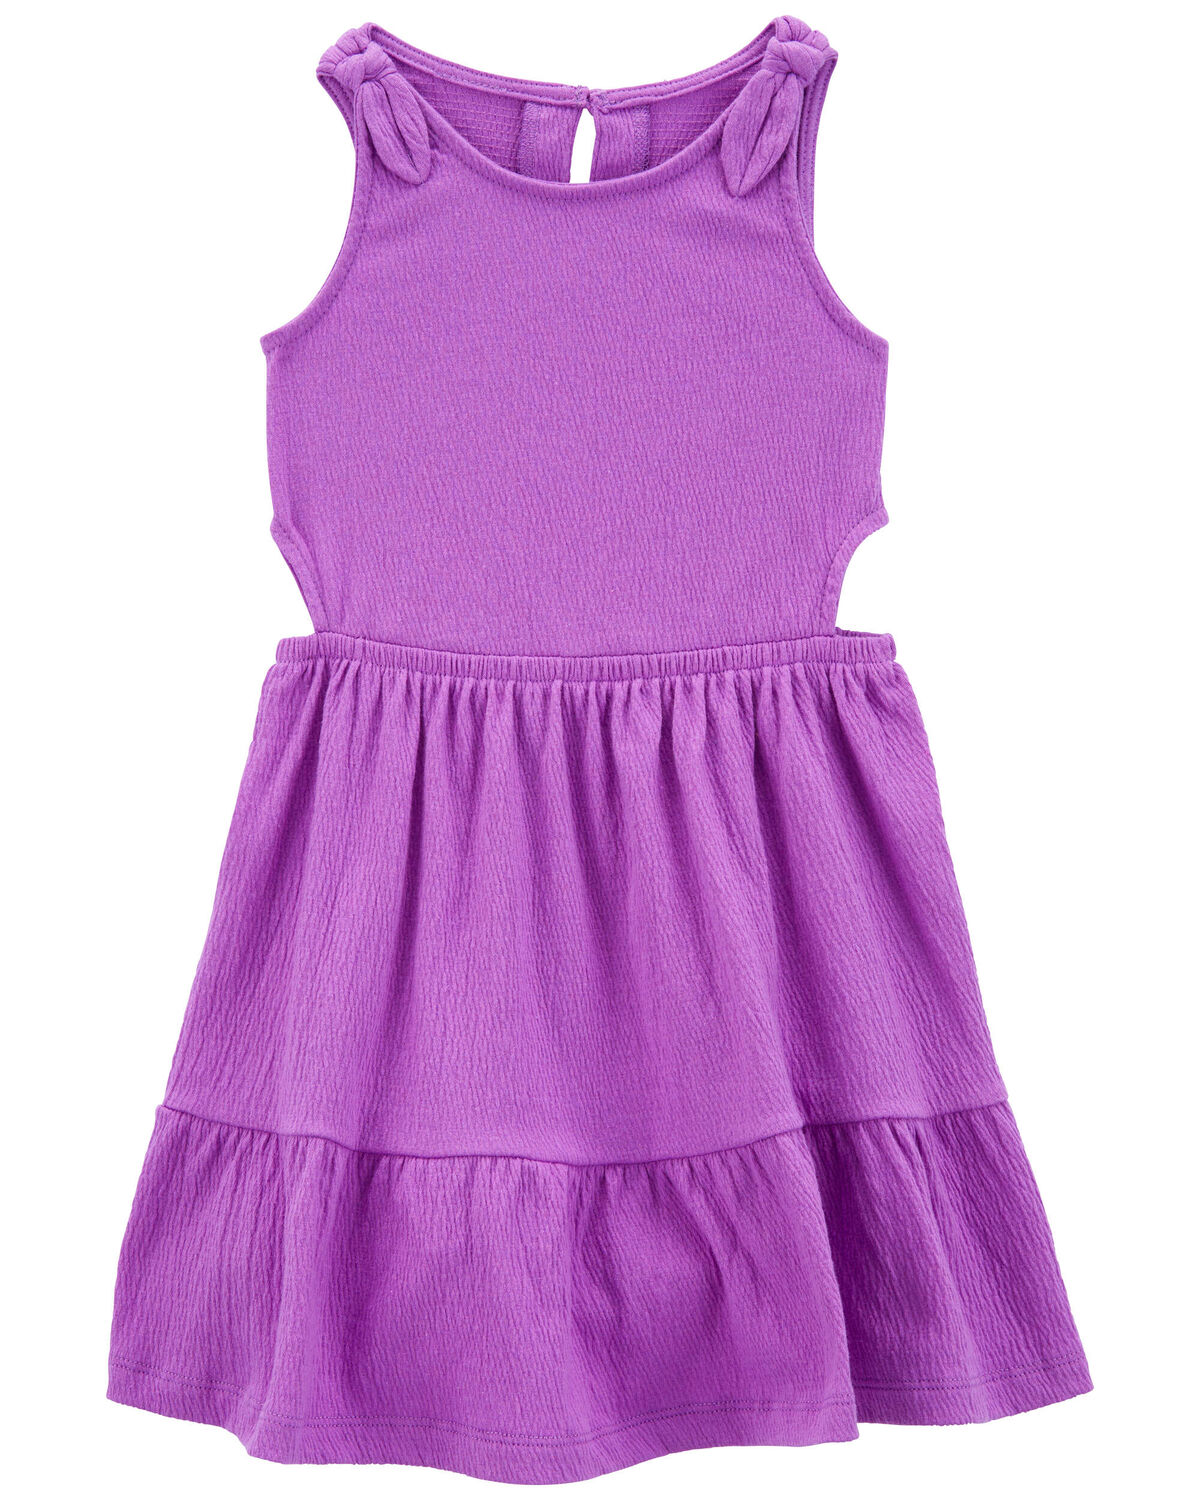 Toddler Knit Gauze Casual Dress